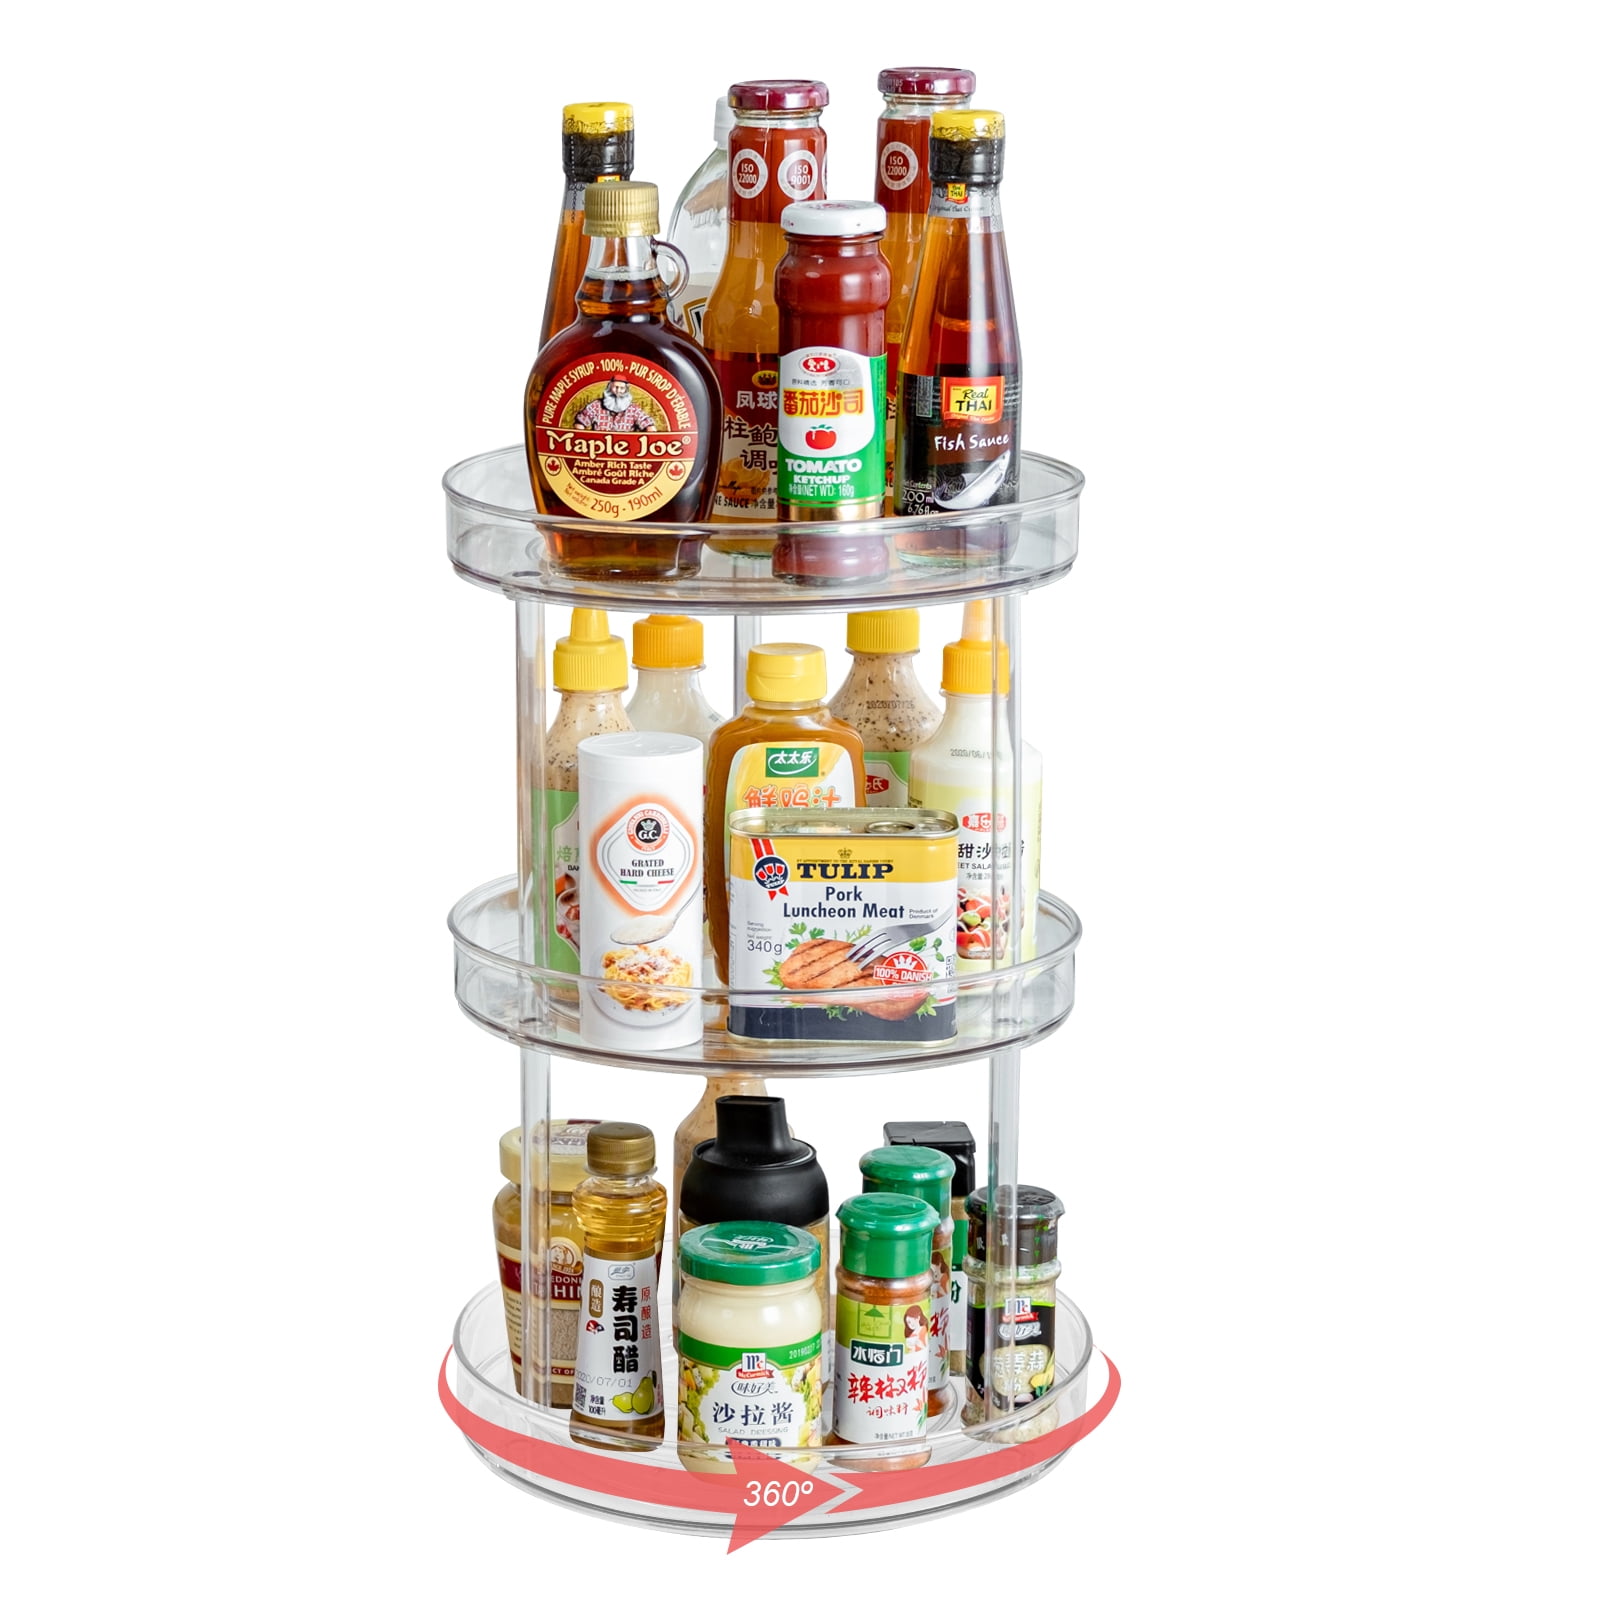 NEX Spice Rack 3 Tier 24-Bottle Spice Drawer Organizer for Pantry Kitc –  Oberon Distribution